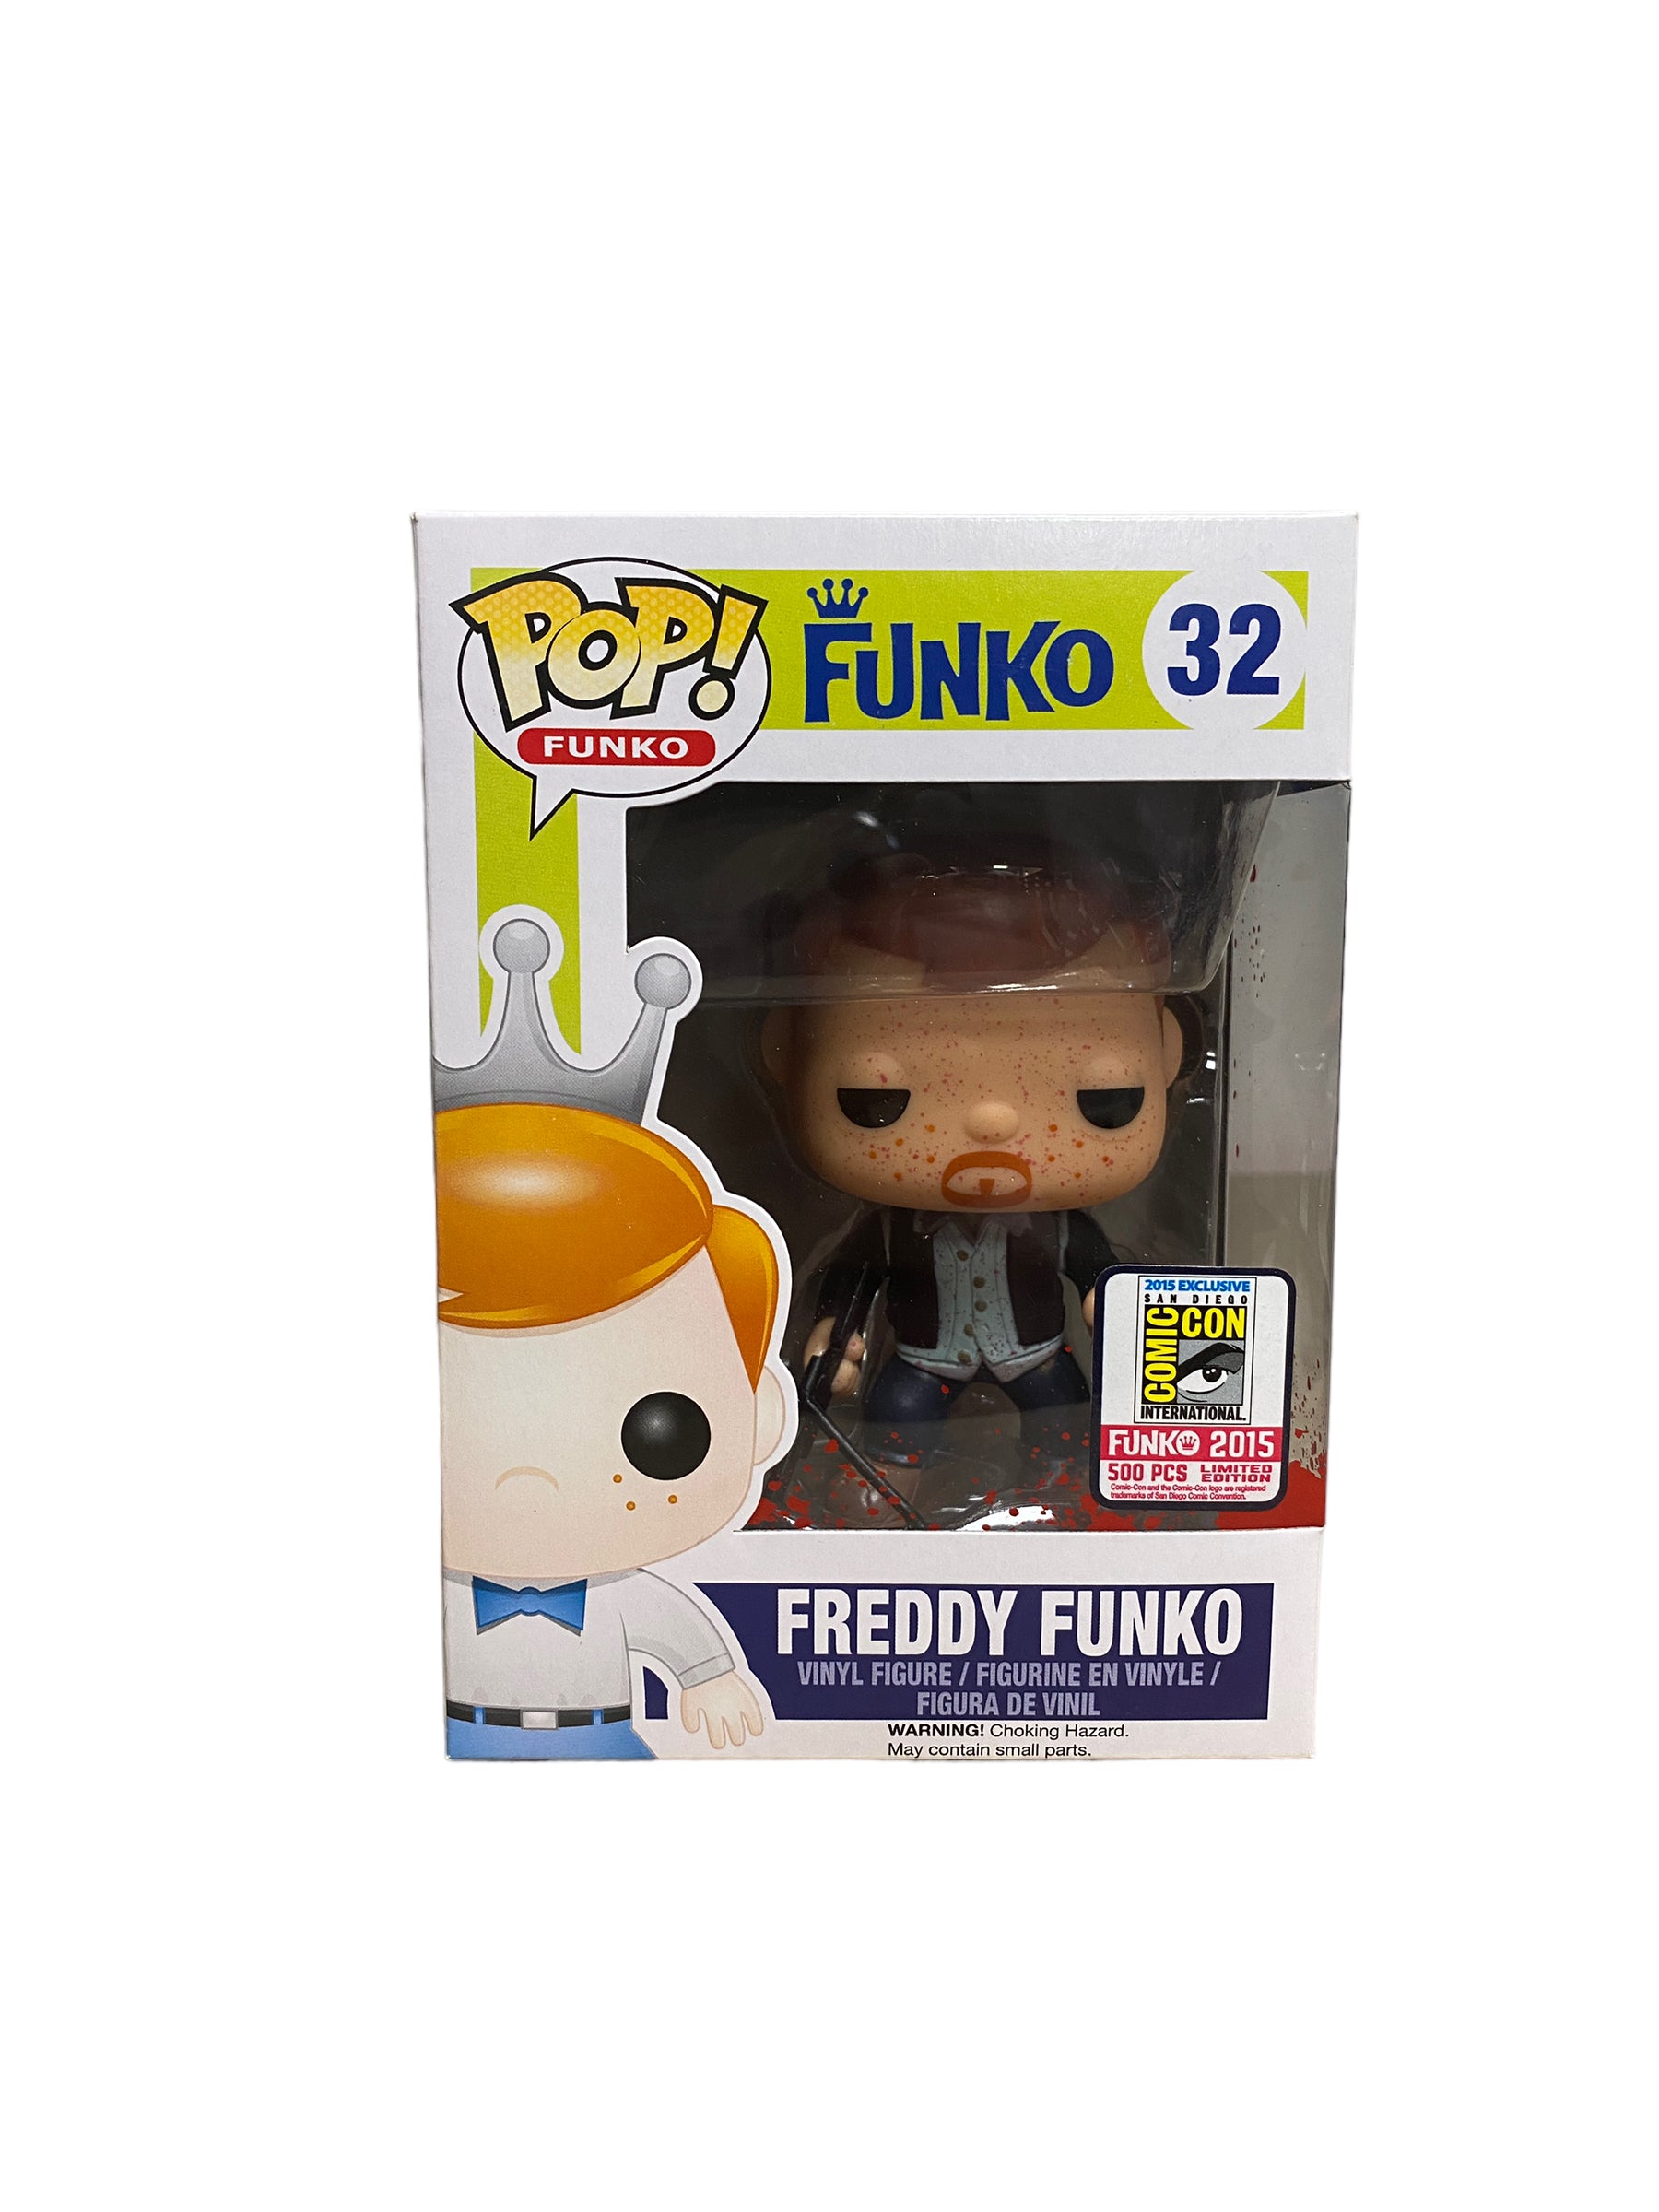 Freddy Funko As Daryl Dixon #32 (Bloody) Funko Pop! - SDCC 2015 Exclusive LE500 Pcs - Condition 7/10